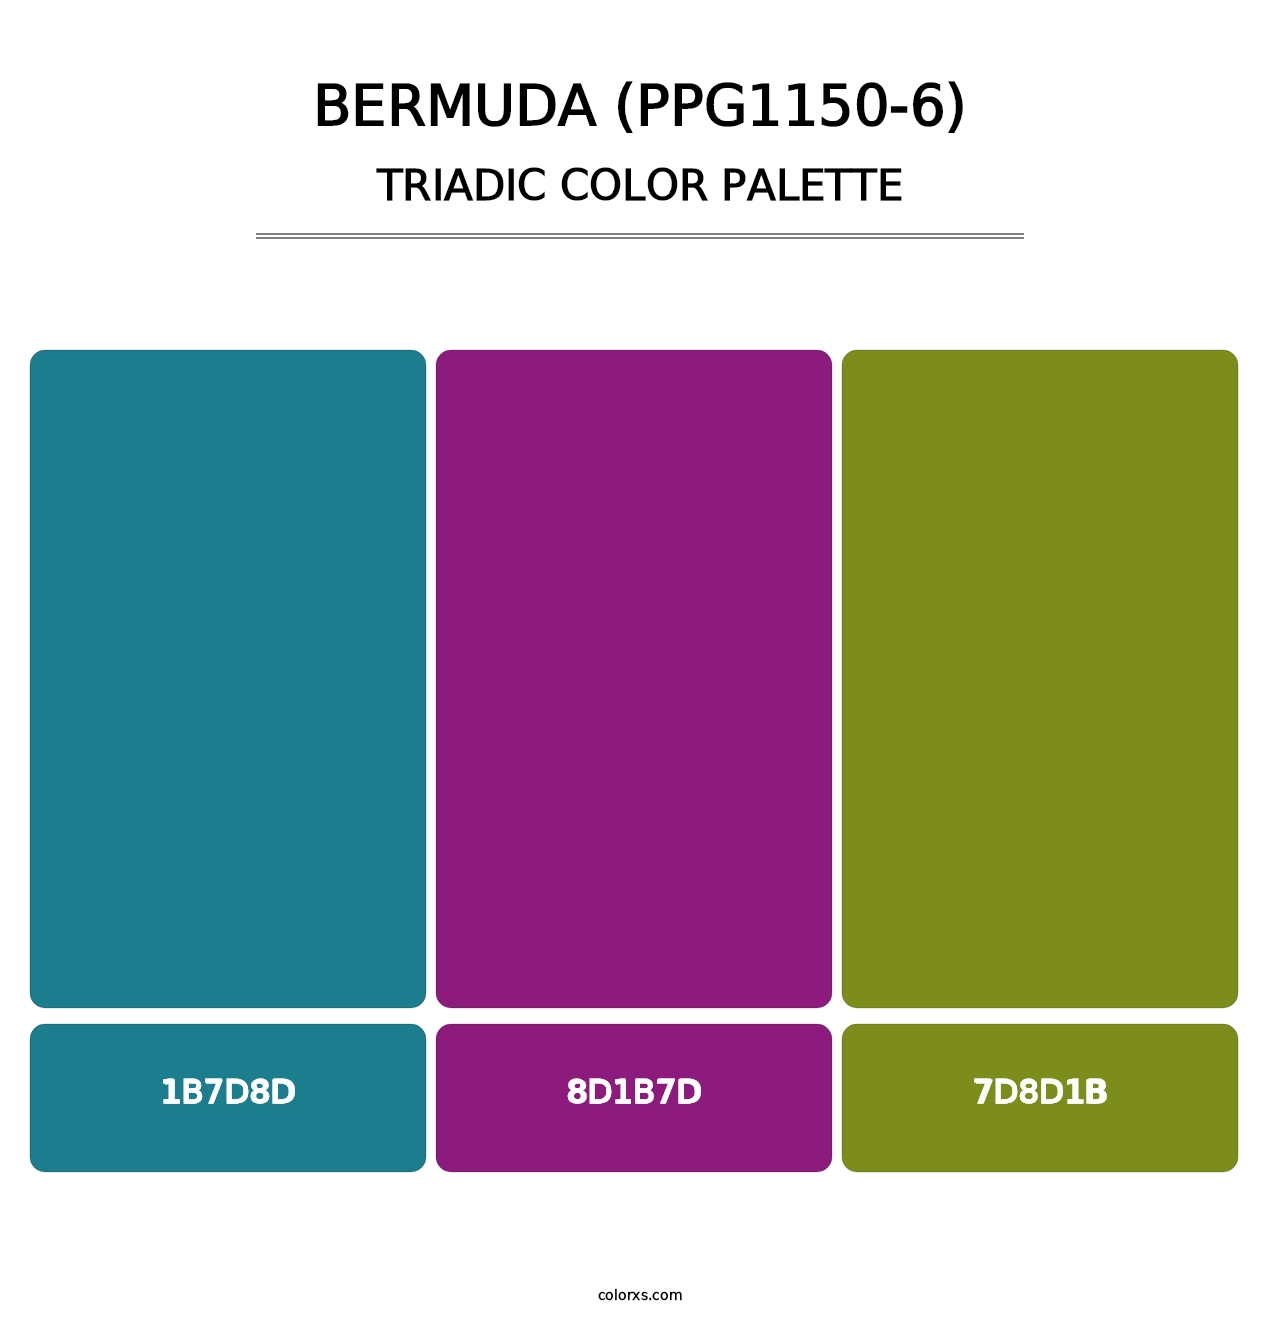 Bermuda (PPG1150-6) - Triadic Color Palette